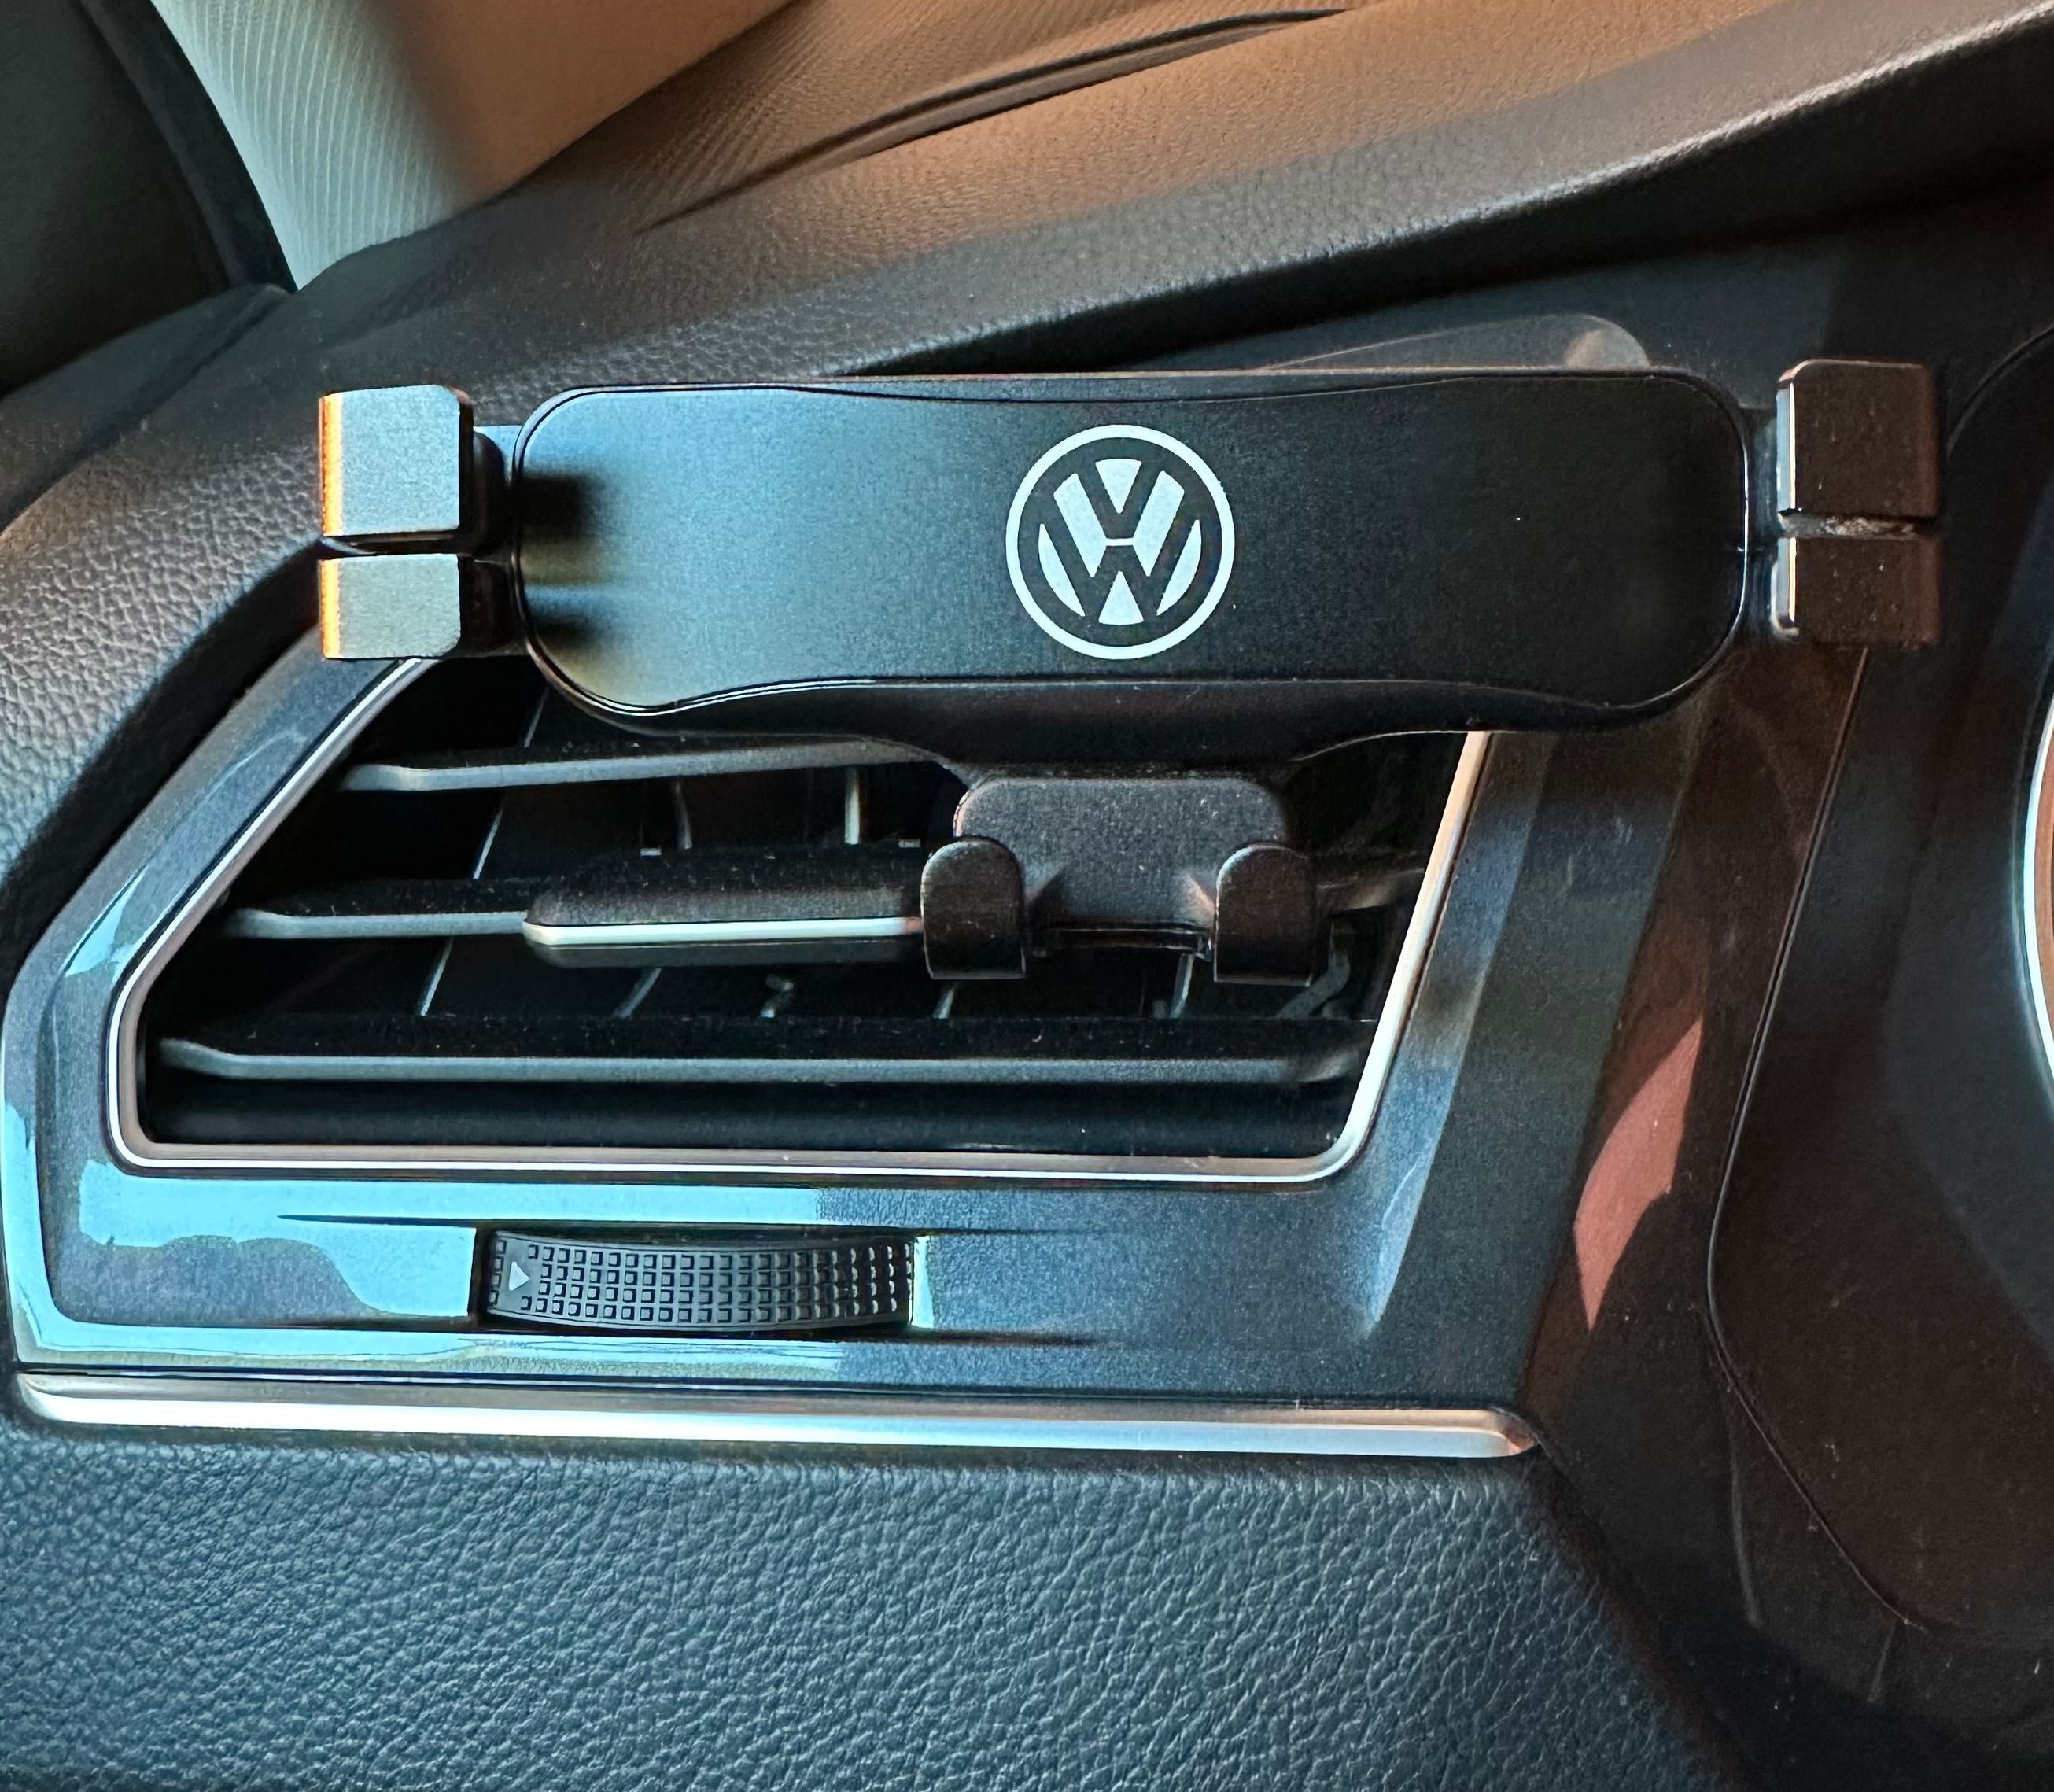 Suporte automóvel VW Volkswagen para telemóvel